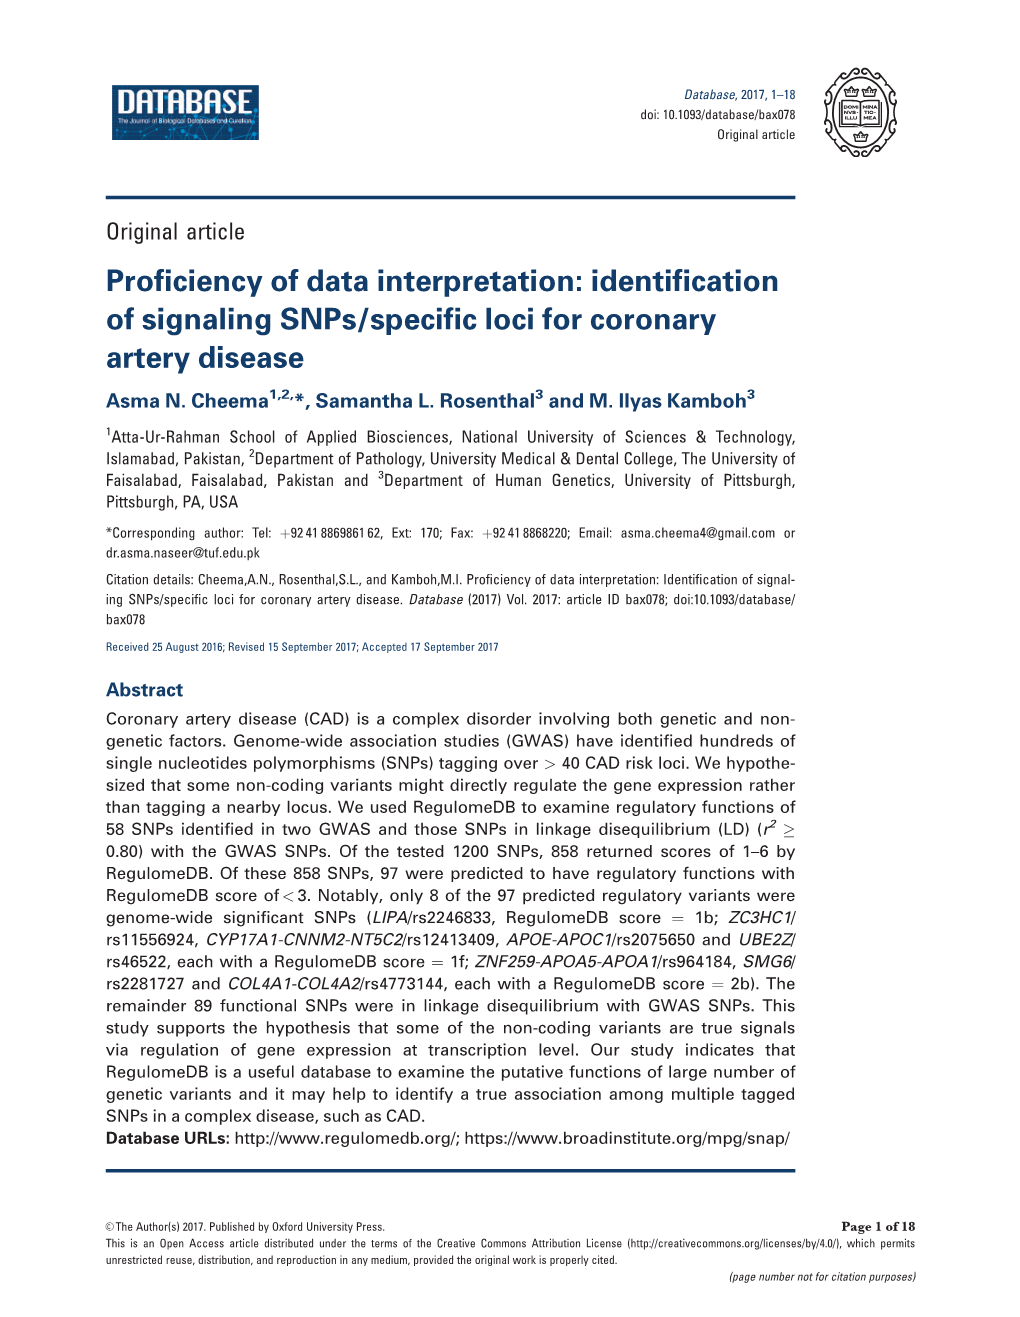 Proficiency of Data Interpretation: Identification of Signaling Snps/Specific Loci for Coronary Artery Disease Asma N